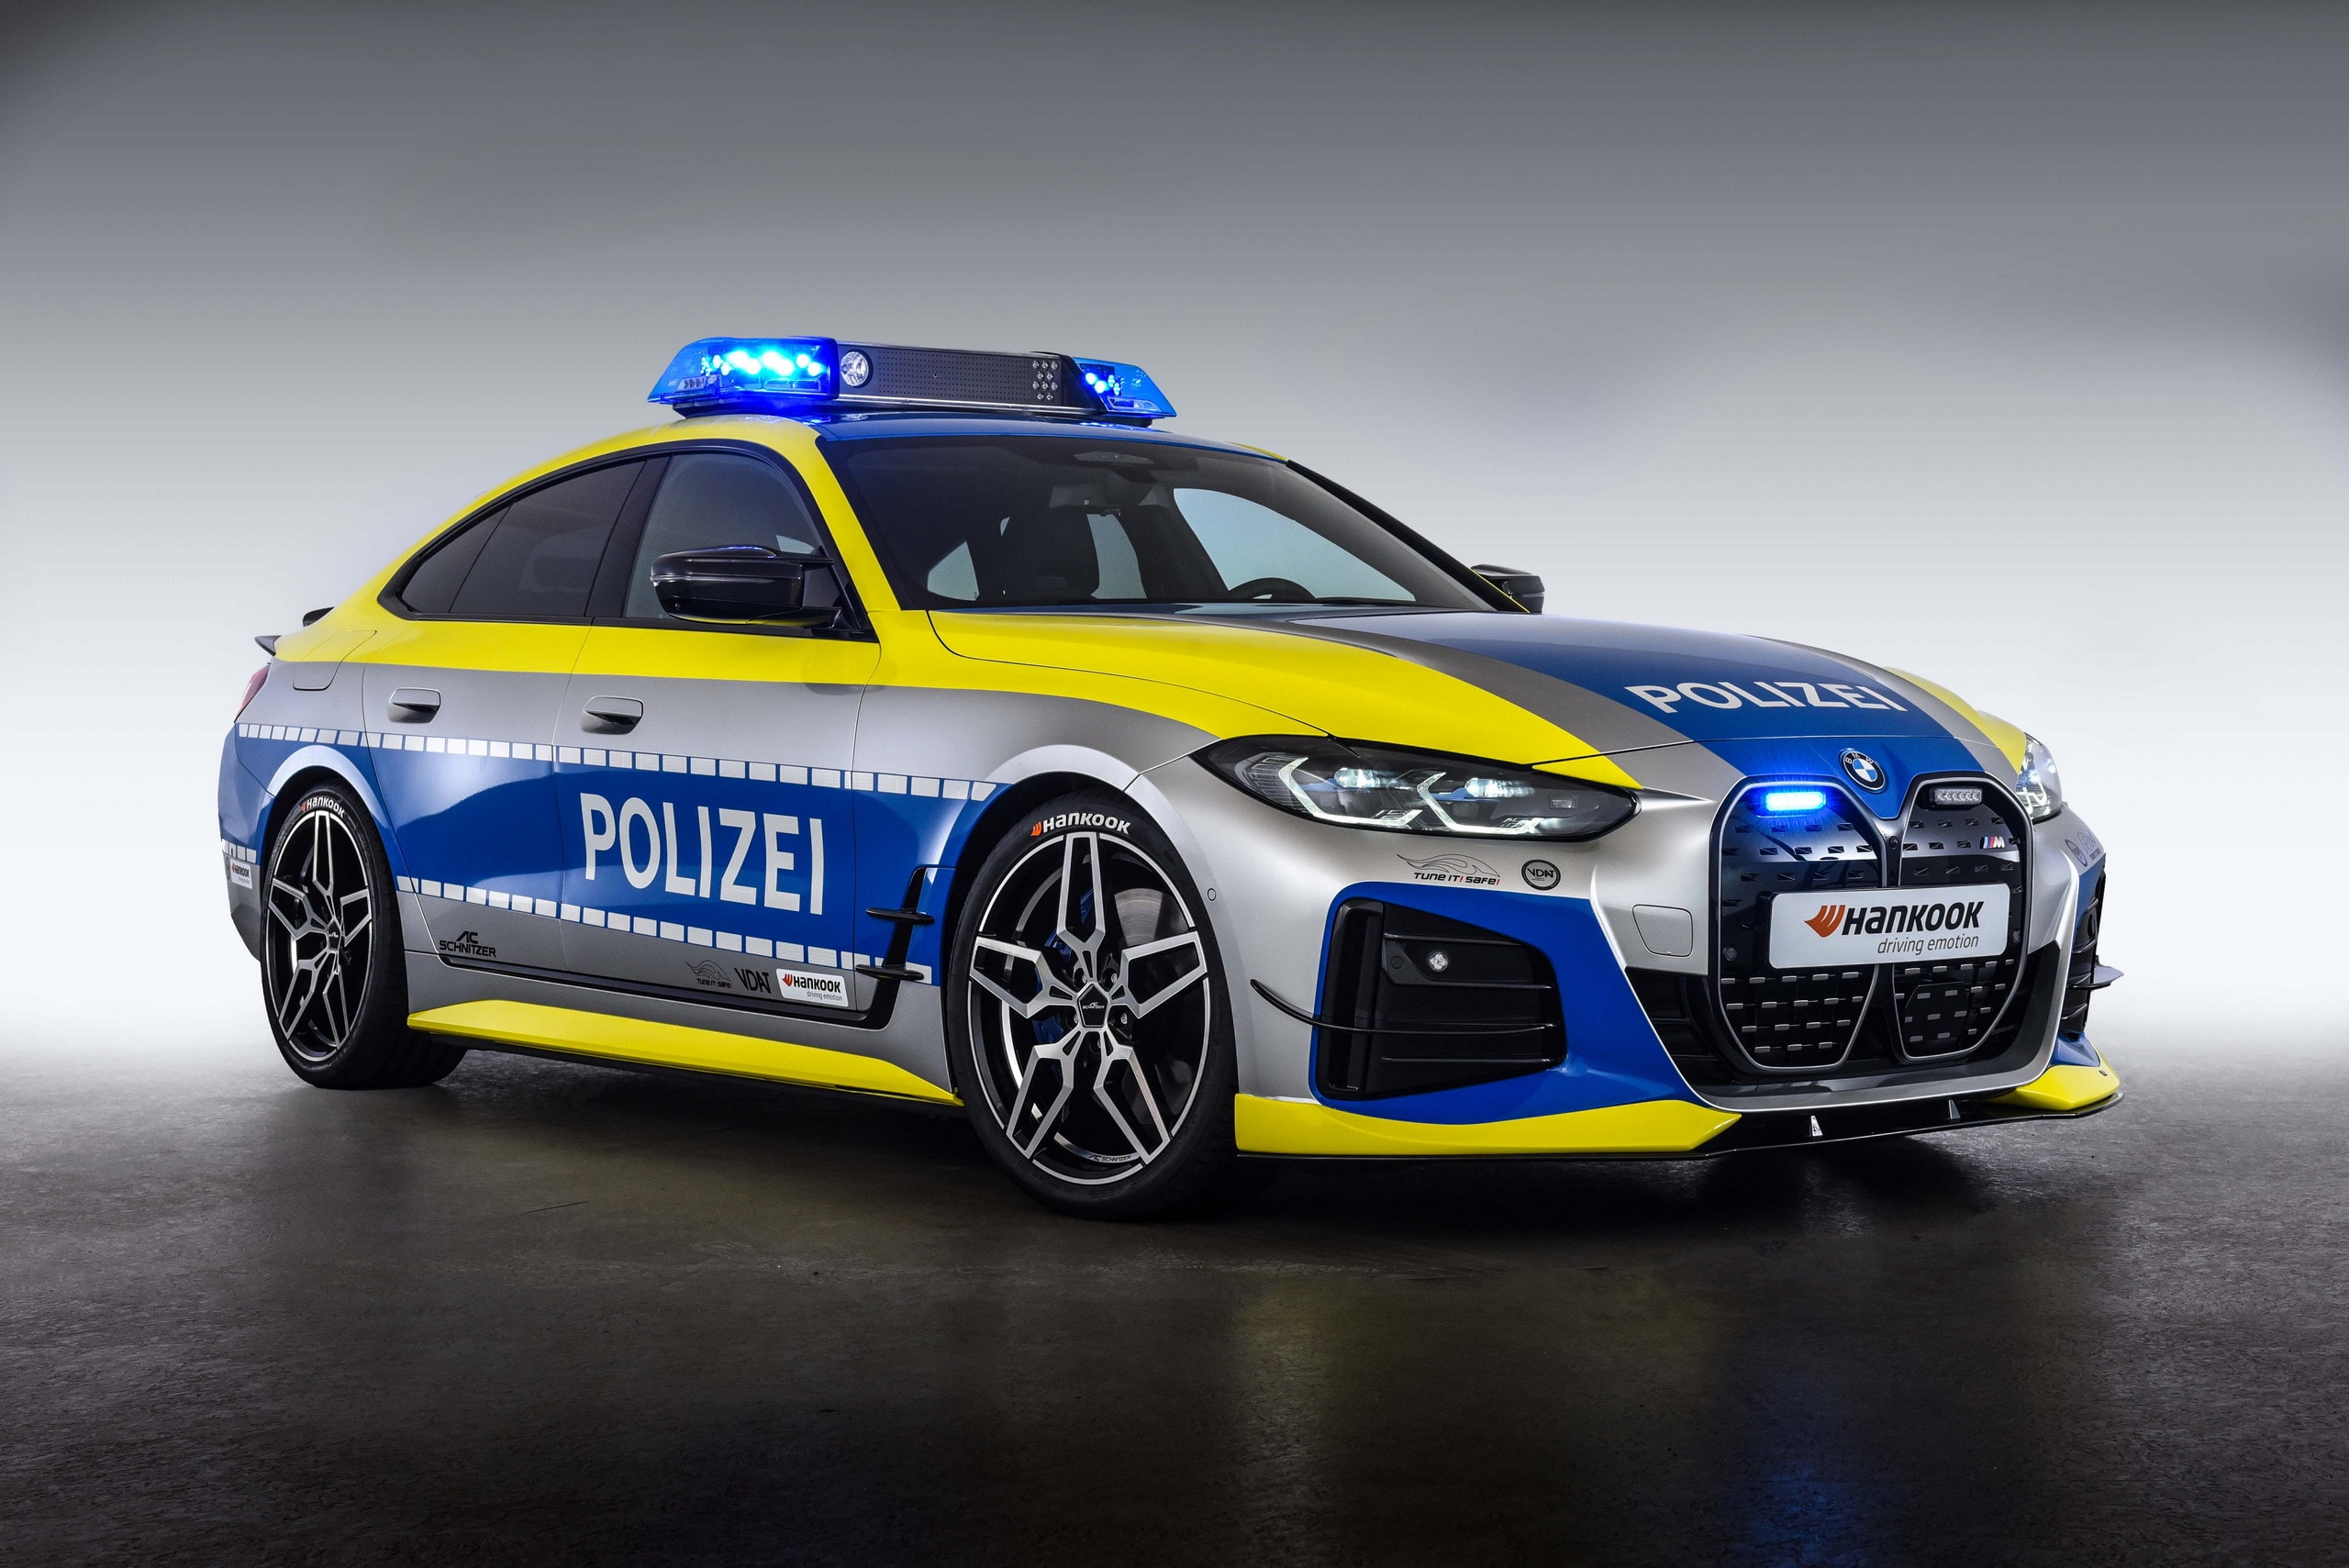 Eins, Zwei, Not-a-Polizei: BMW i4 Cop Car Is a Demo, Police